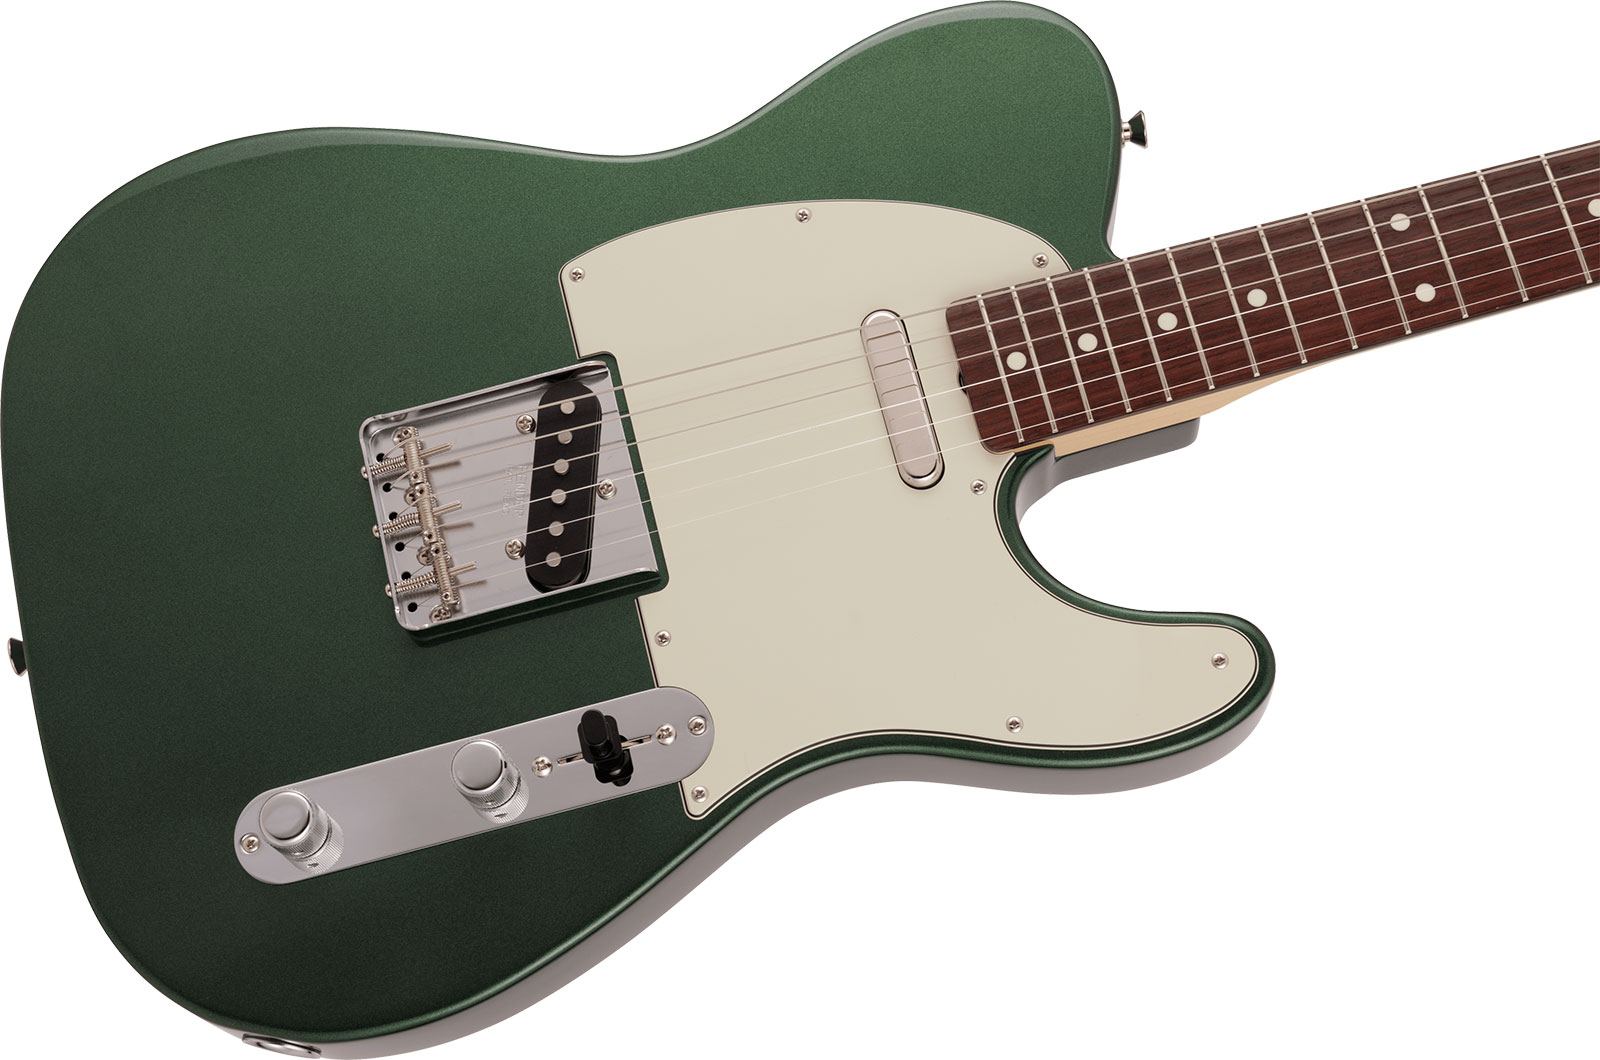 Fender Tele Traditional 60s Mij 2s Ht Rw - Aged Sherwood Green Metallic - E-Gitarre in Teleform - Variation 2